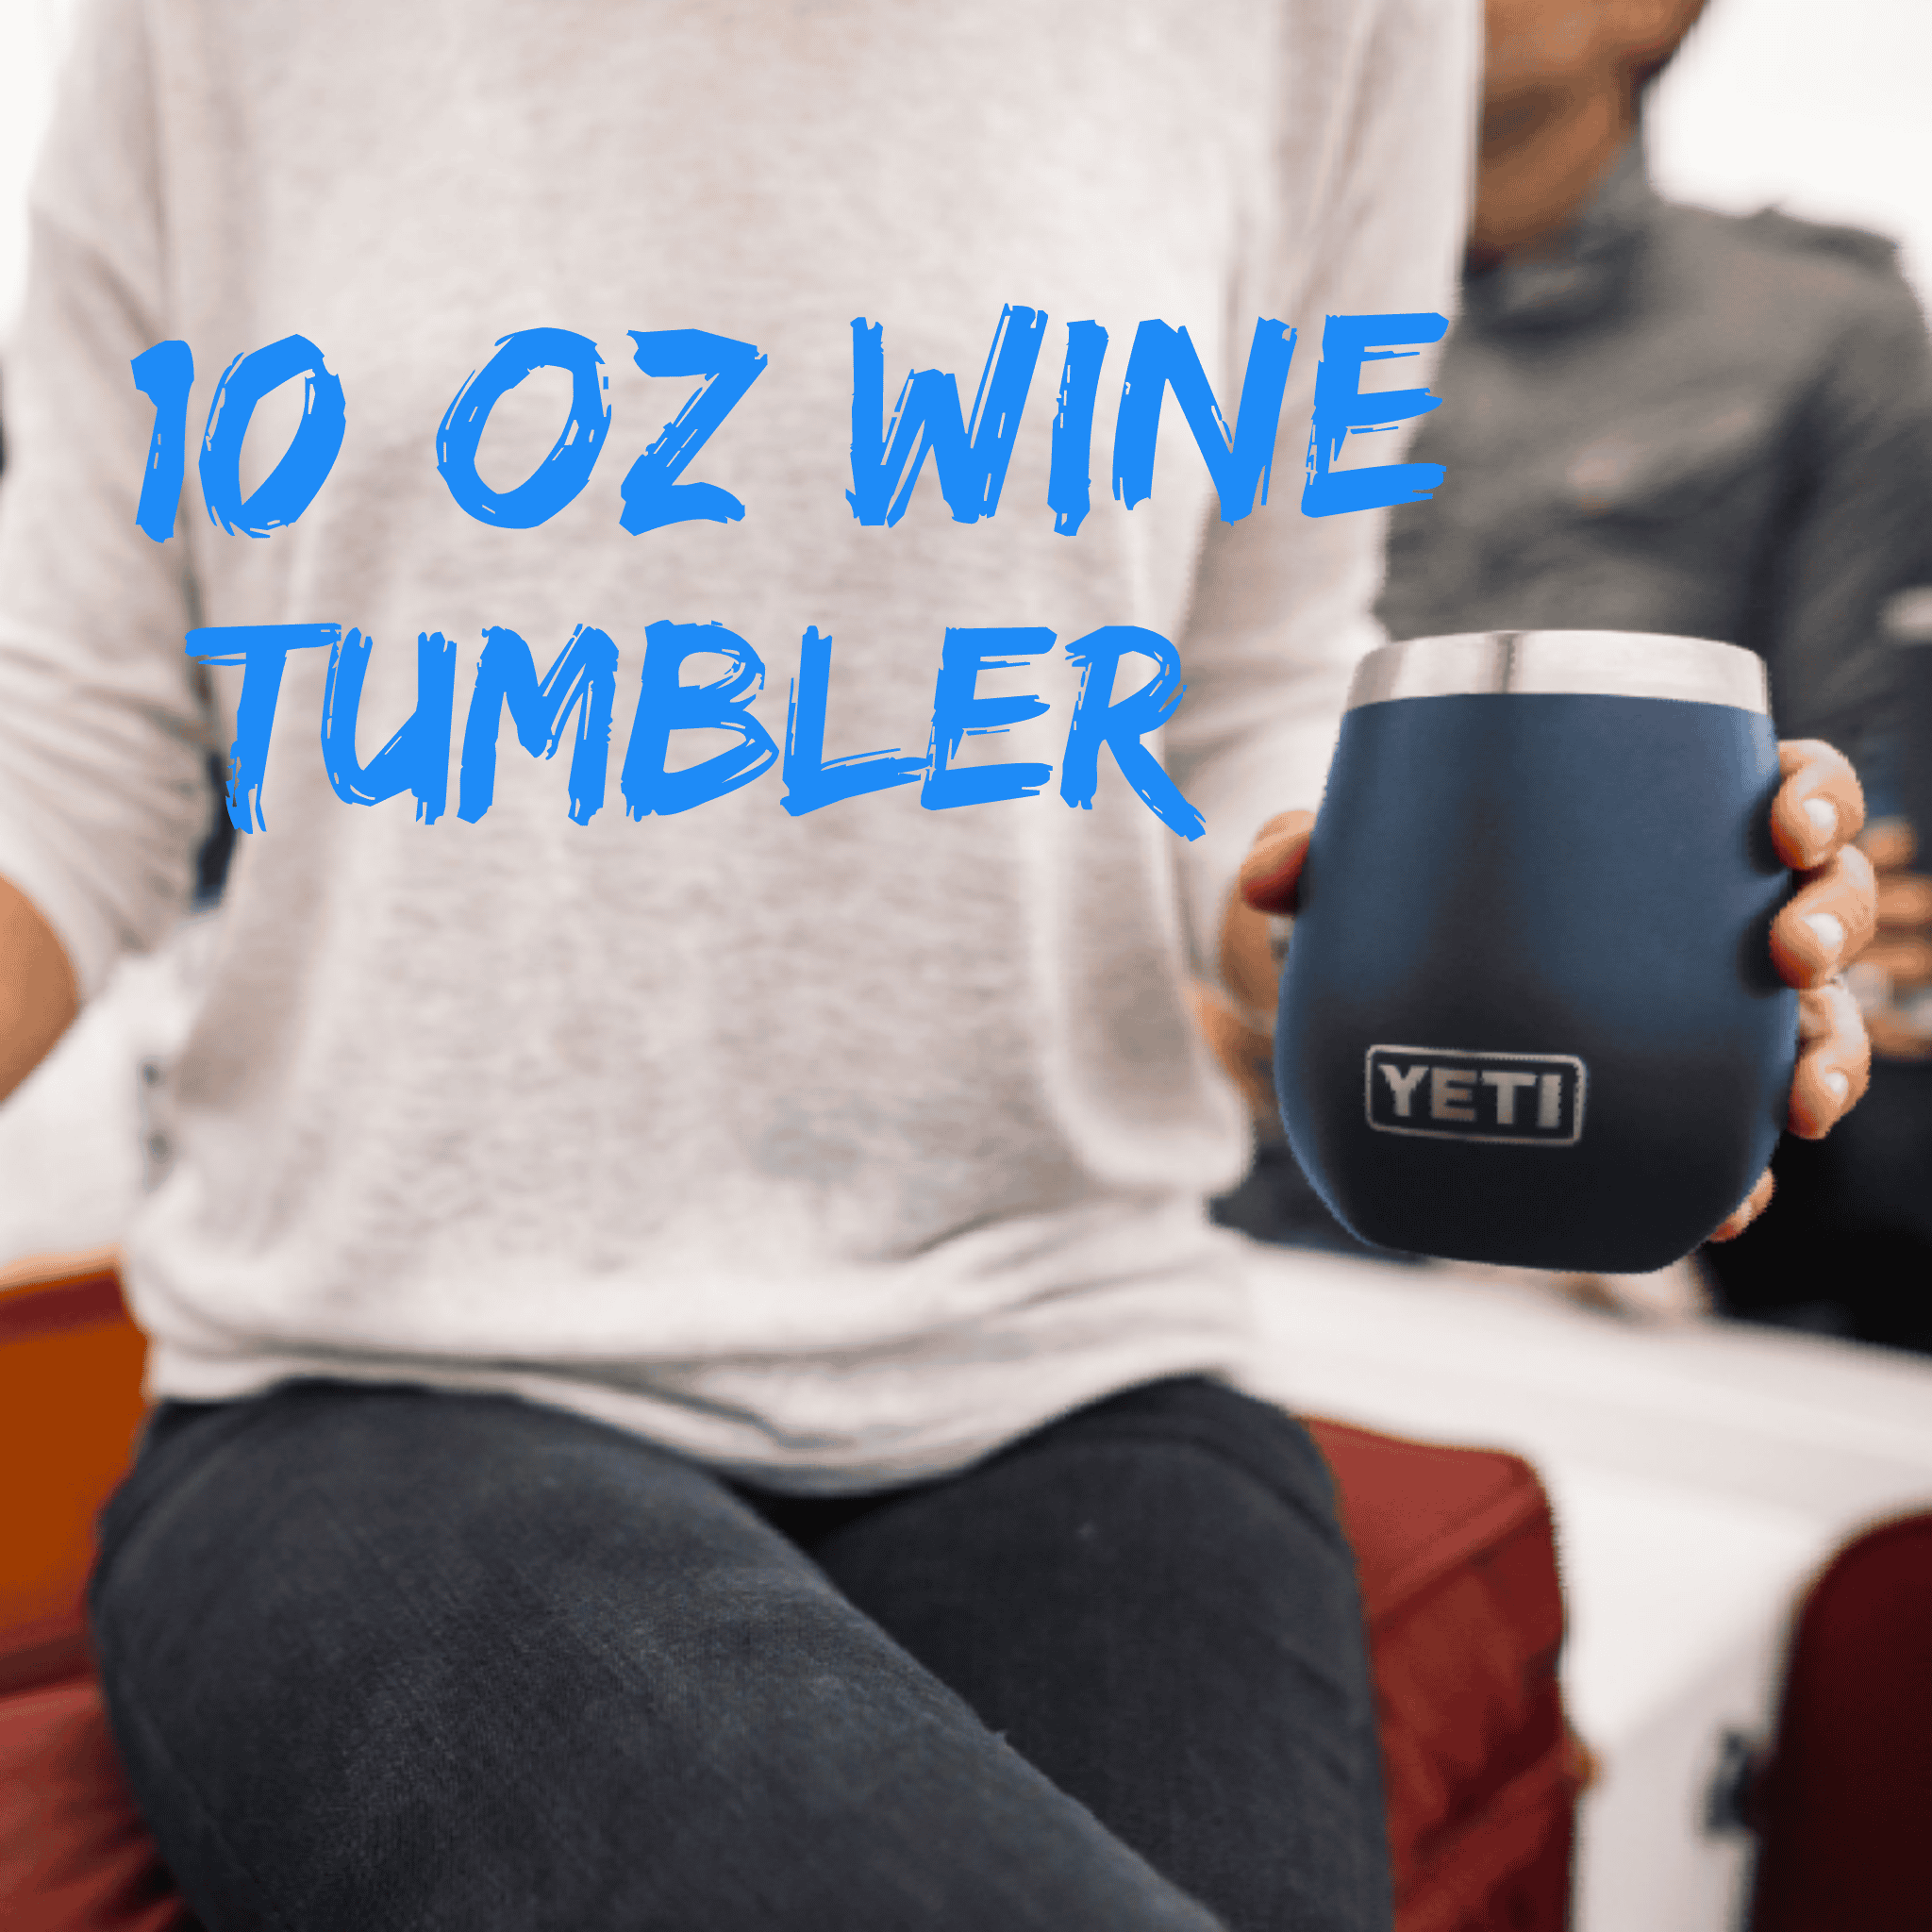 Yeti 10oz Wine Tumbler